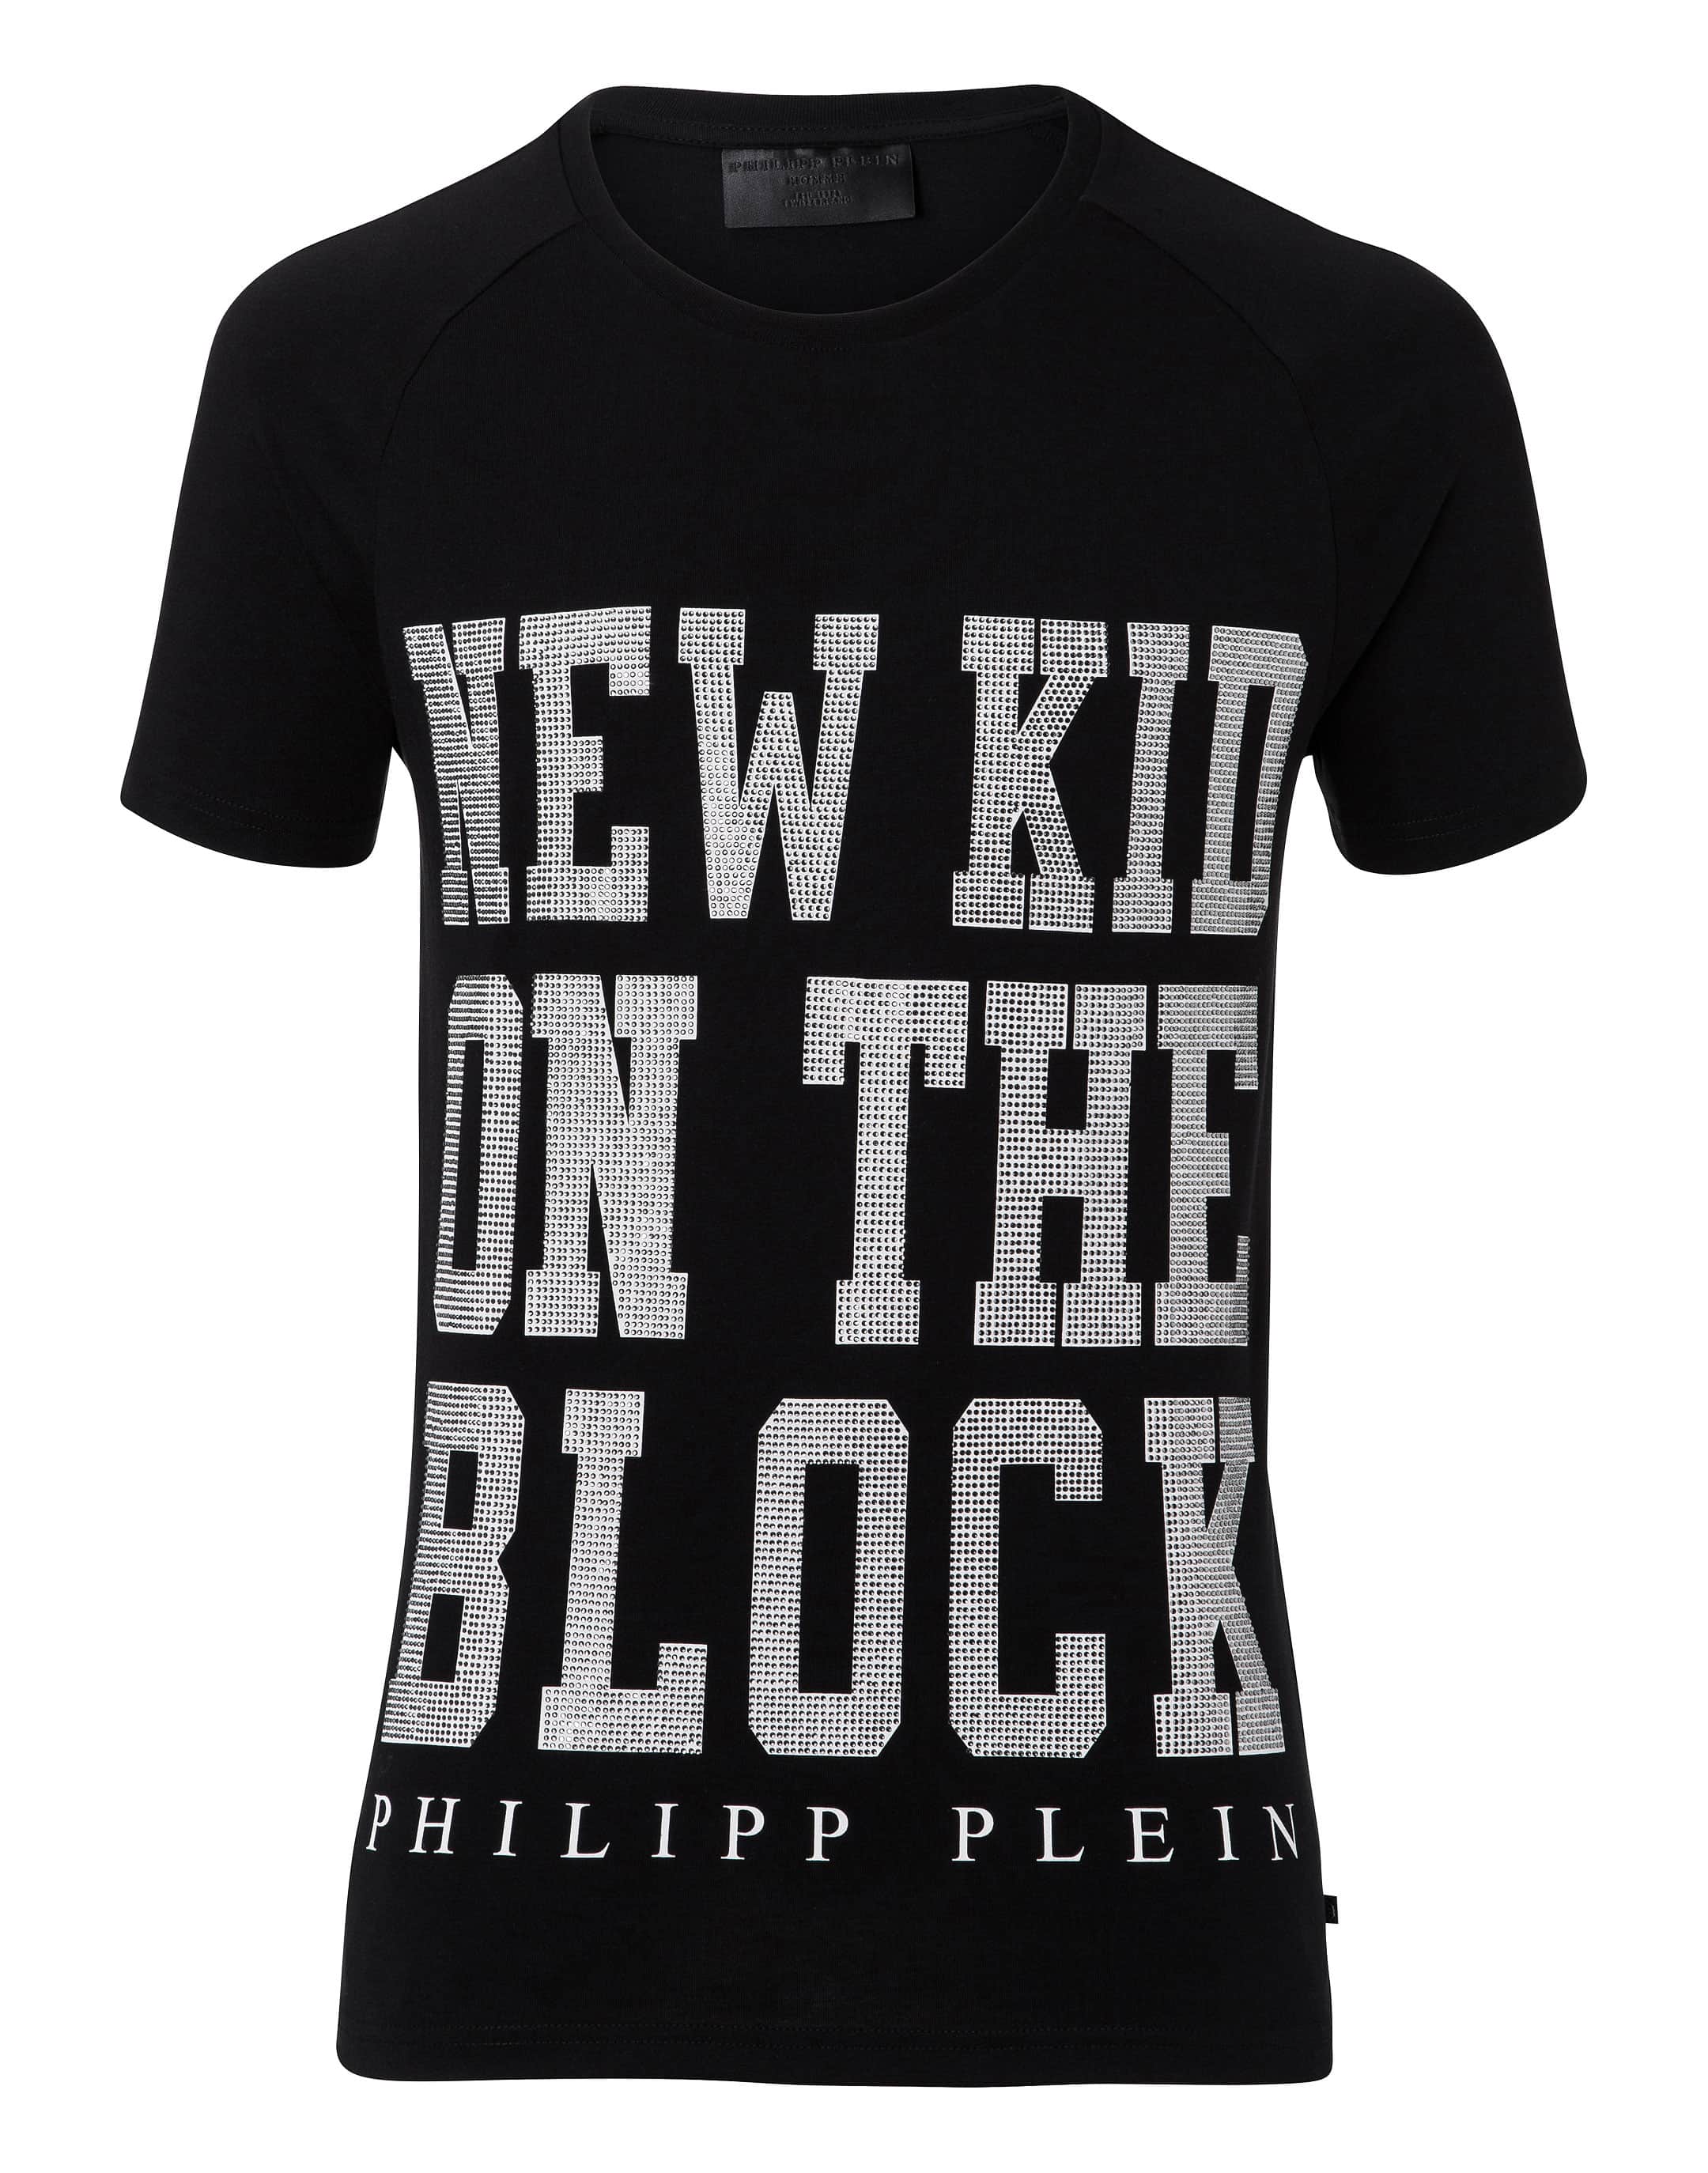 philipp plein t shirt kids